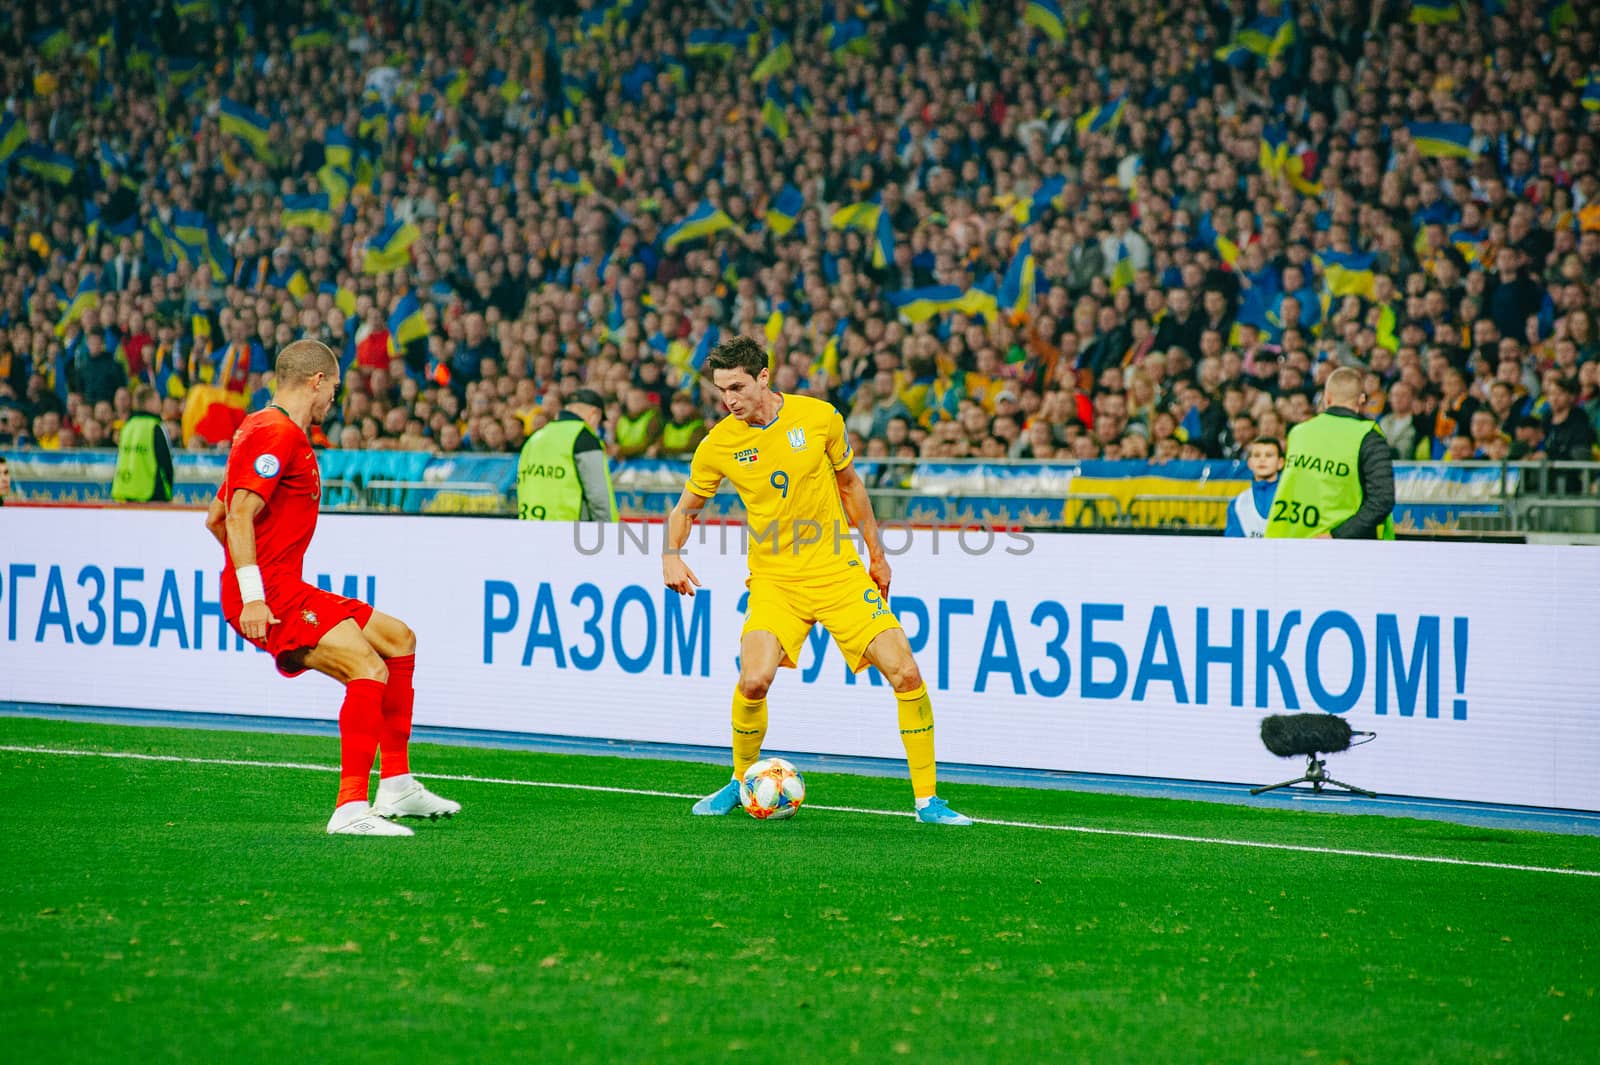 Kyiv, Ukraine - October 14, 2019: Roman Yaremcuk, forward of Ukraine during the match of EURO 2020 vs Portugal at the Olympic Stadium